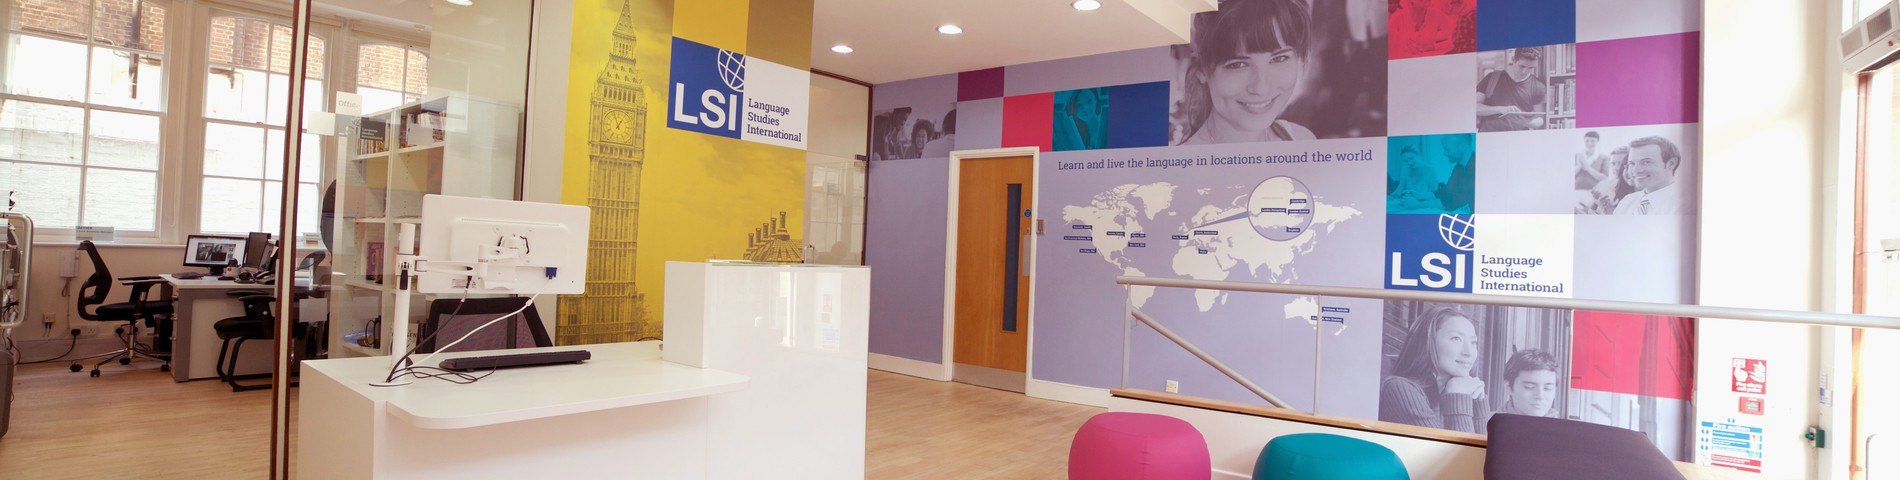 LSI - Language Studies International - Central รูปภาพ 1